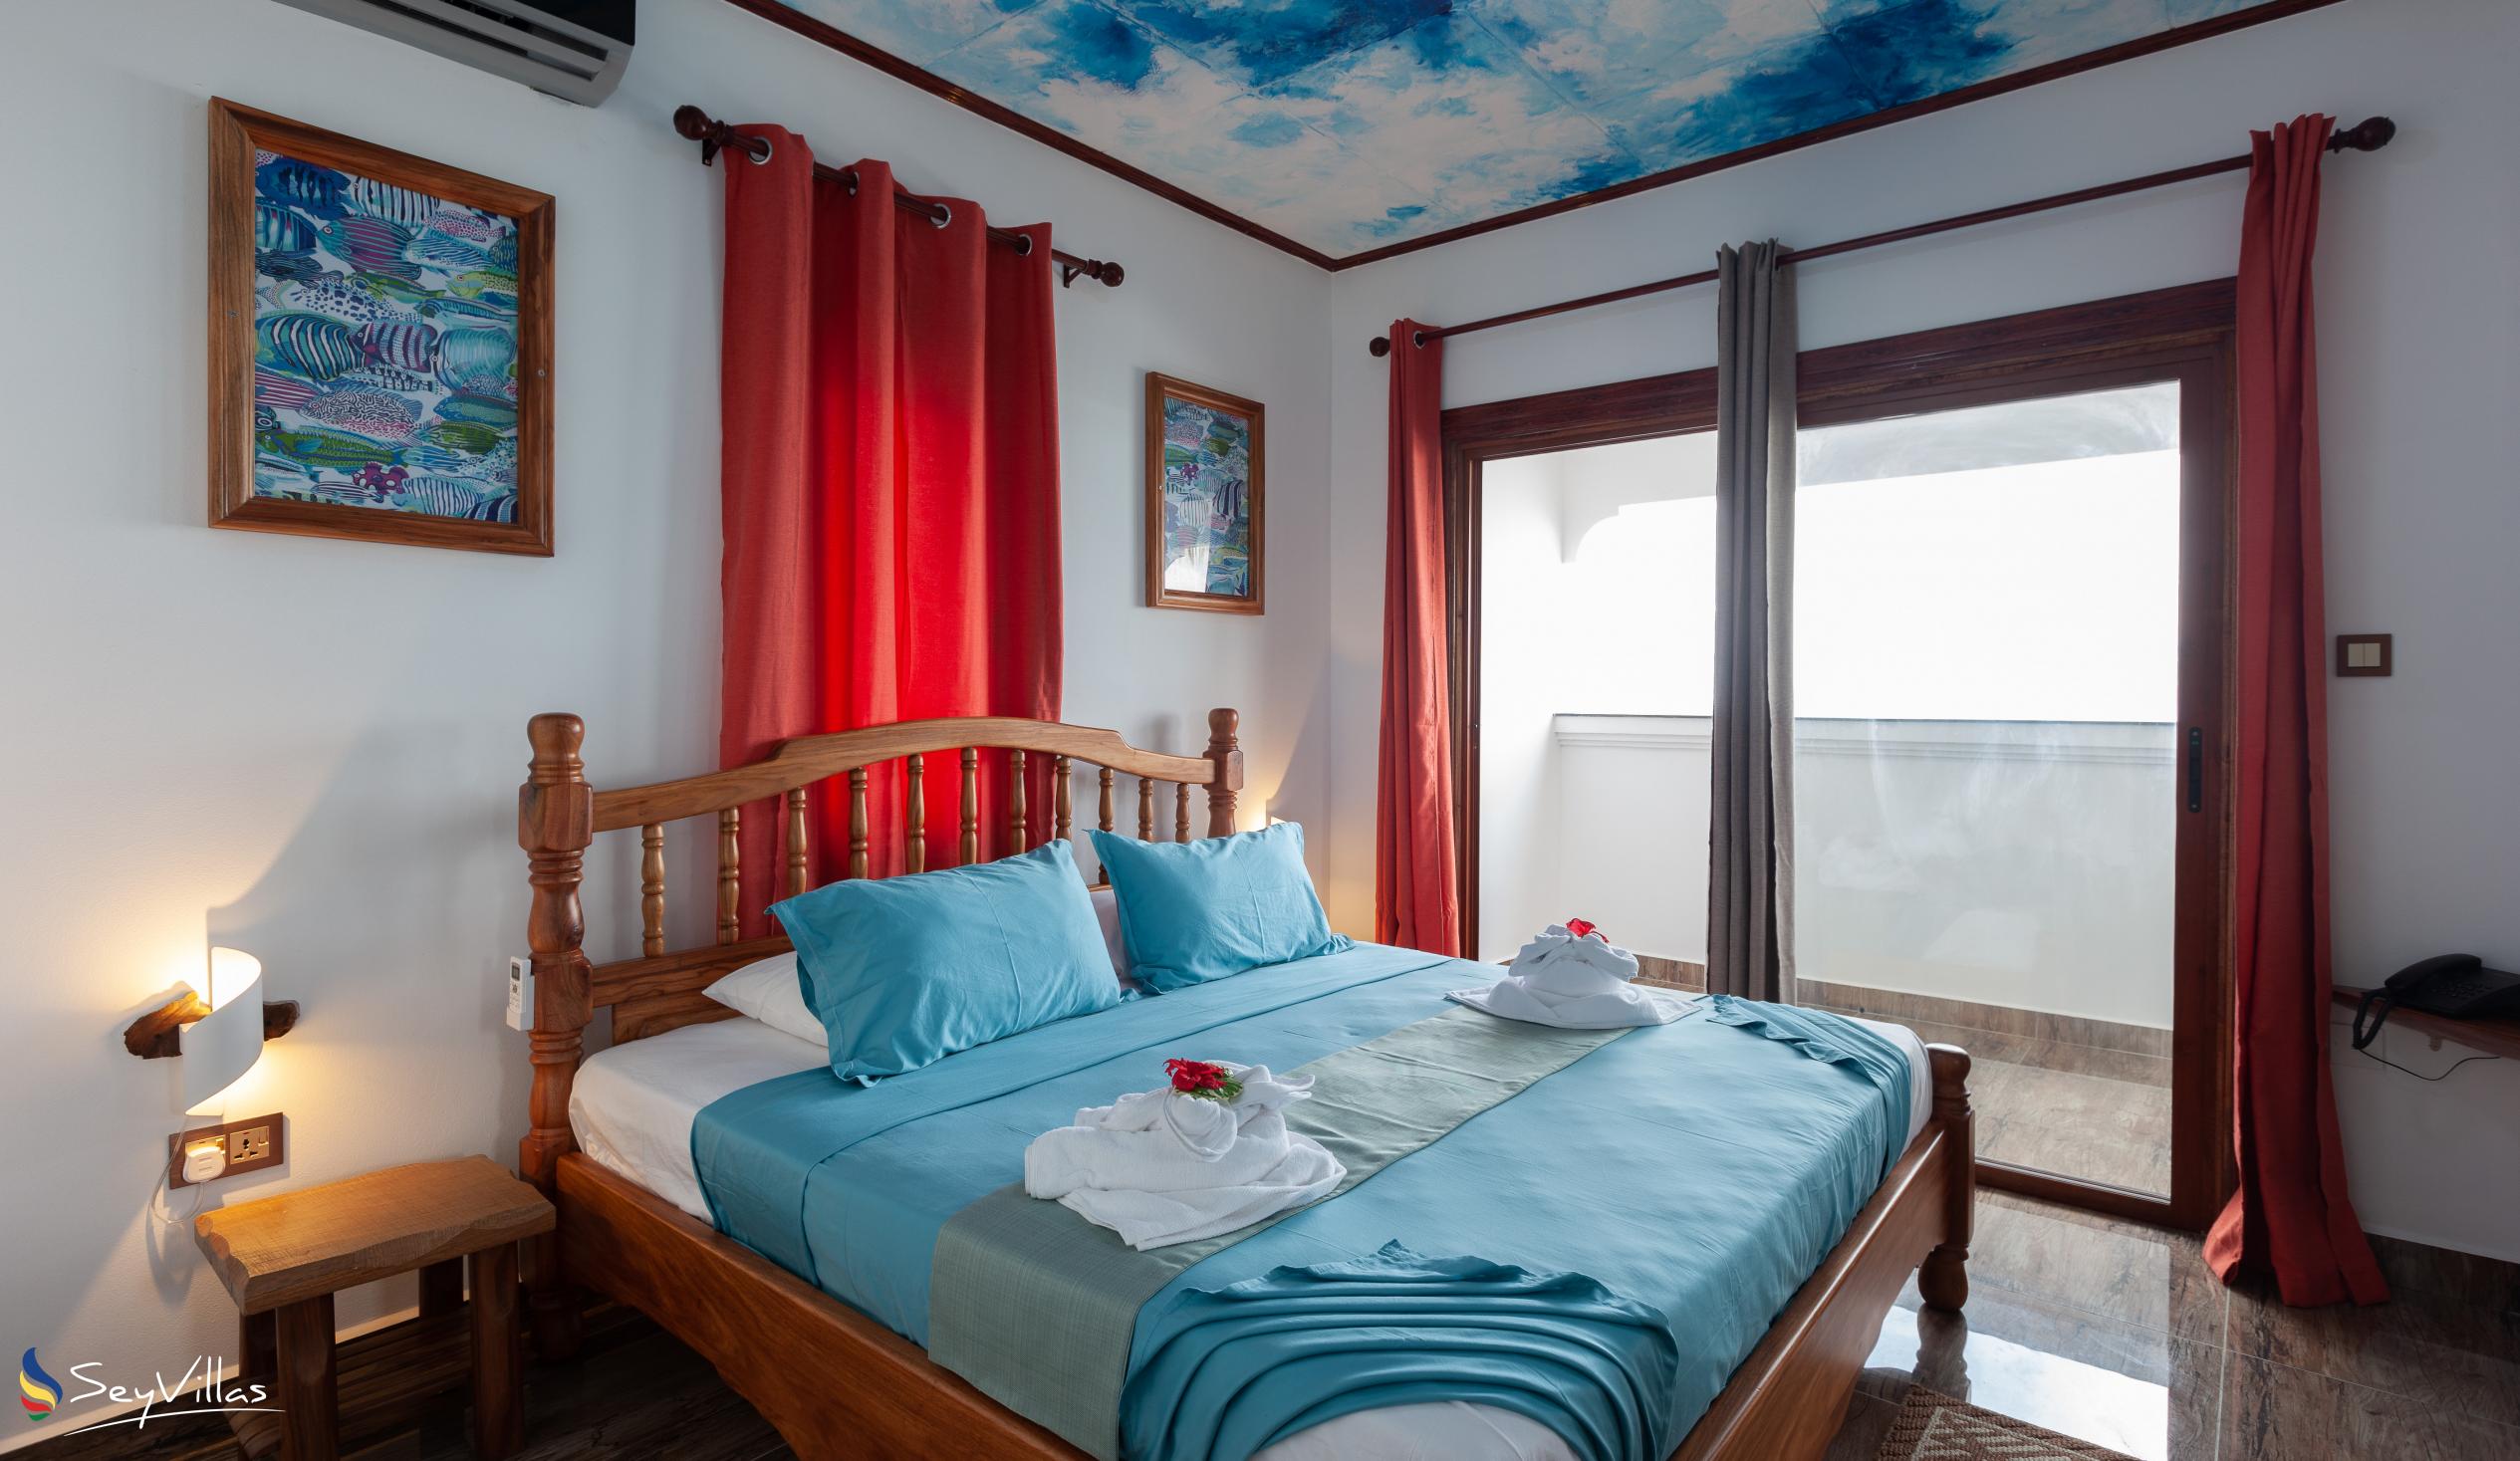 Photo 54: MT Seaside Apartments - Superior Sea-View Apartment - La Digue (Seychelles)